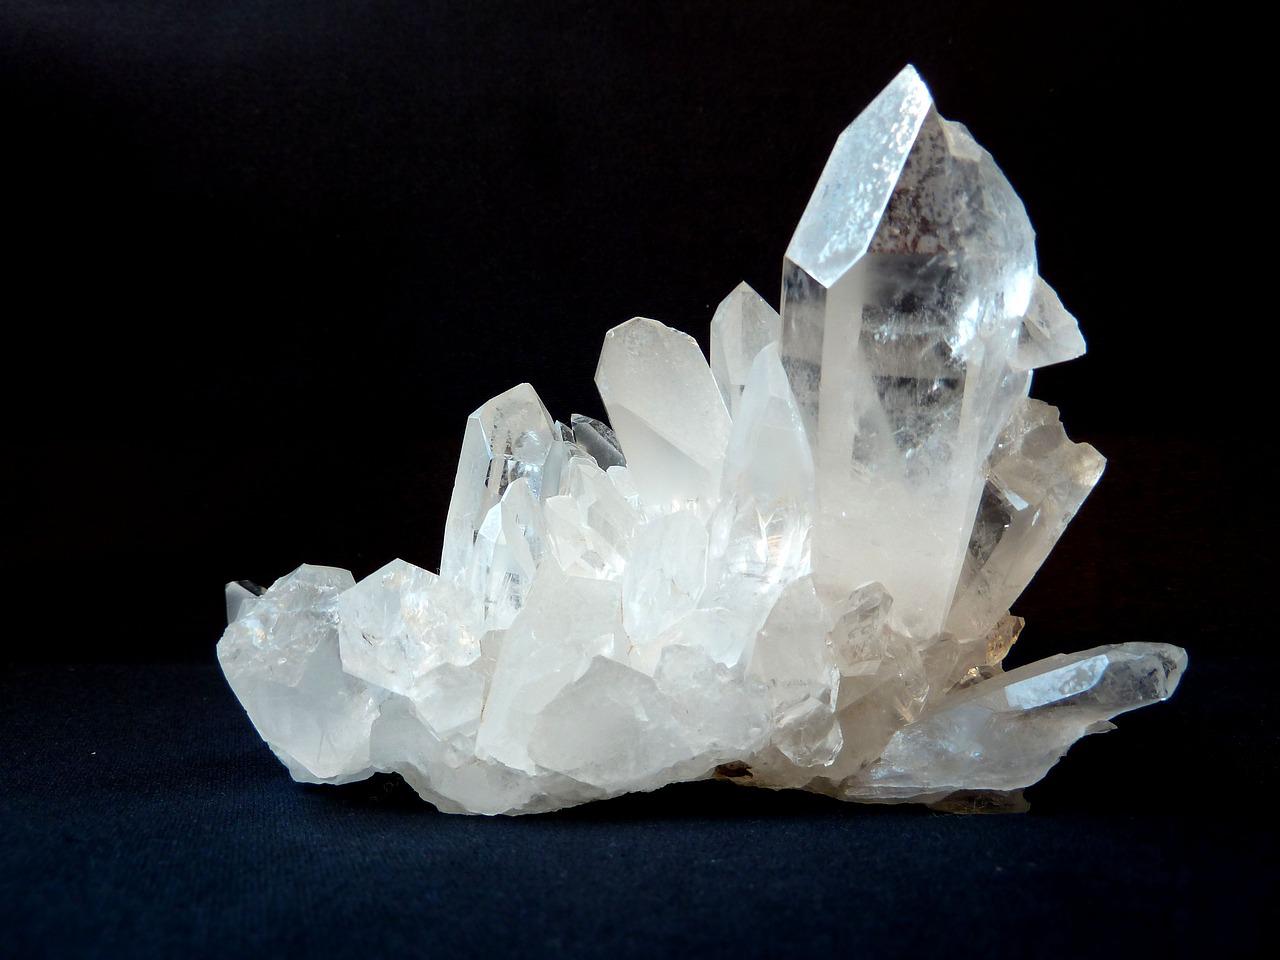 rock-crystal-g2bb9c4588_1280